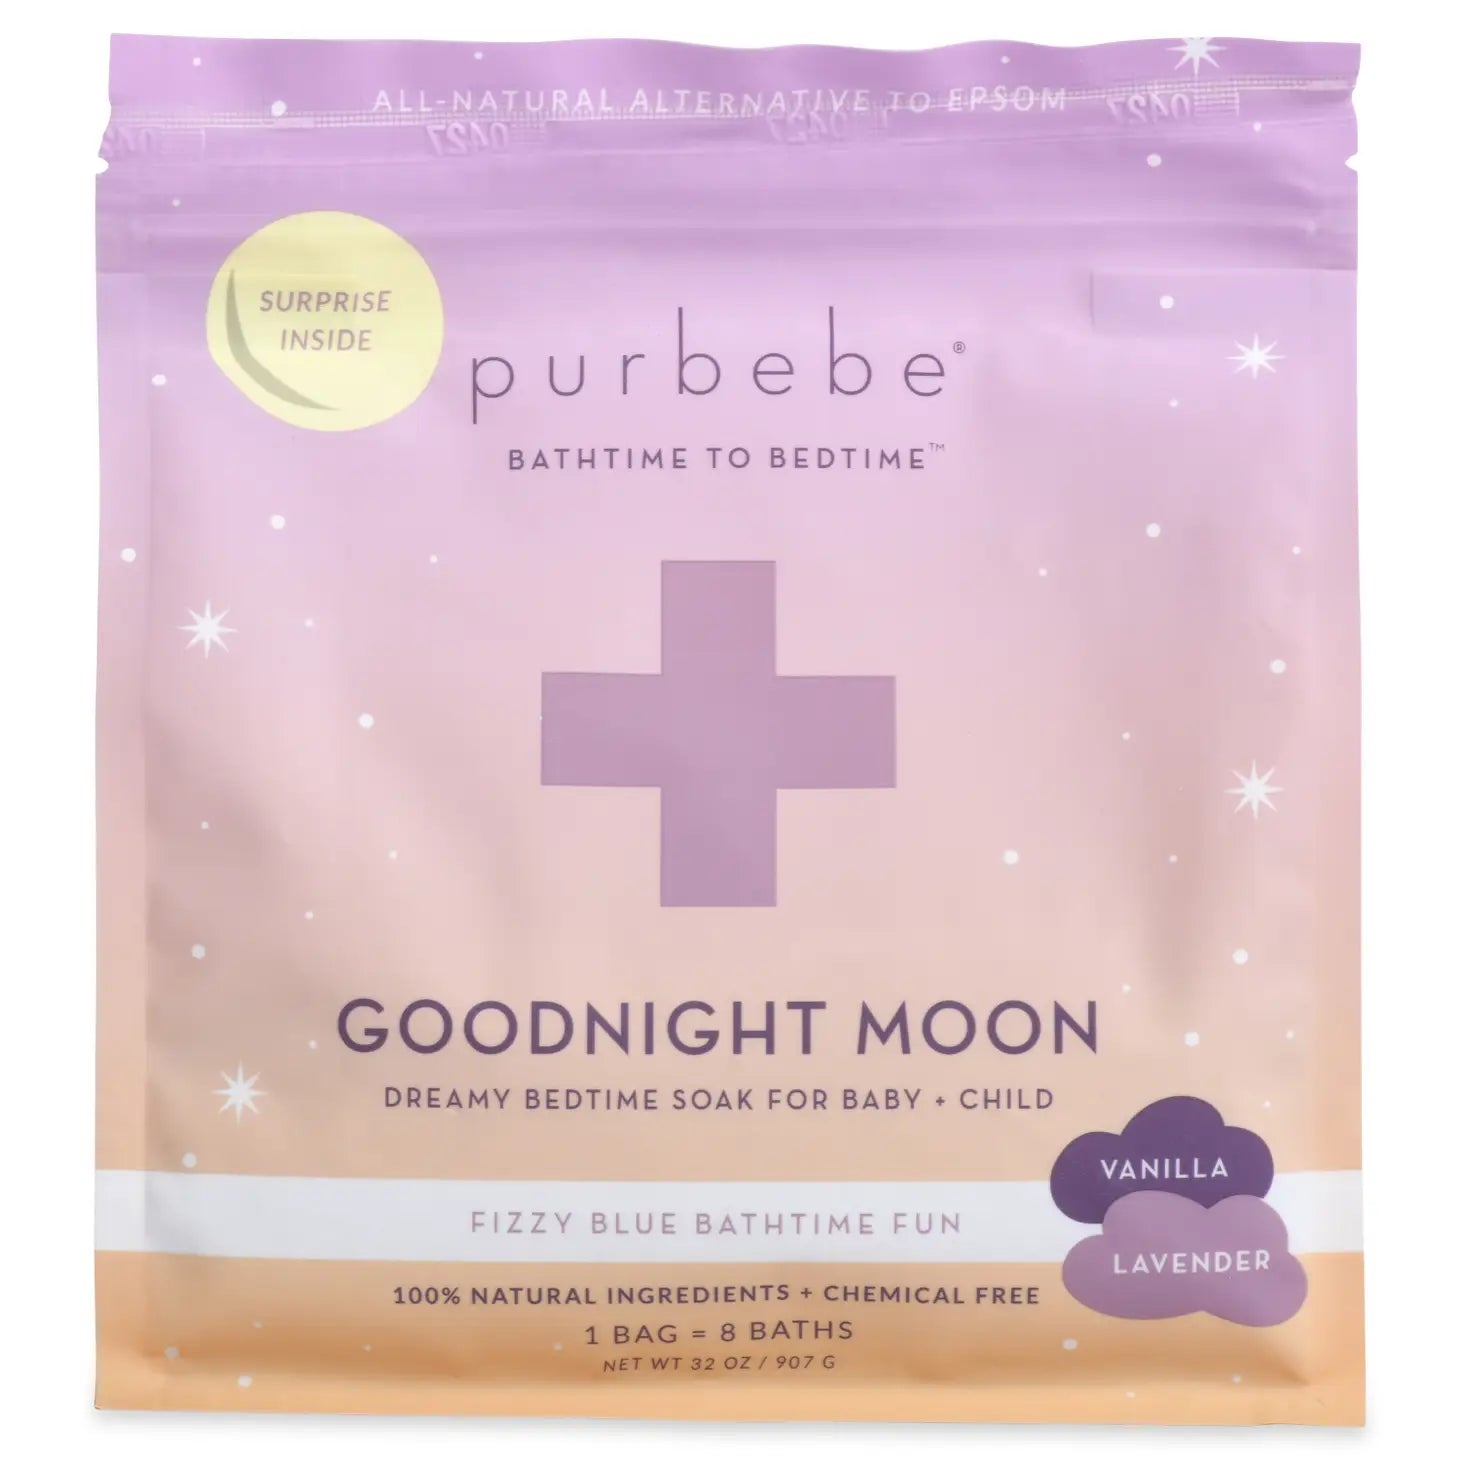 Purebebe Goodnight Moon Bath Soak